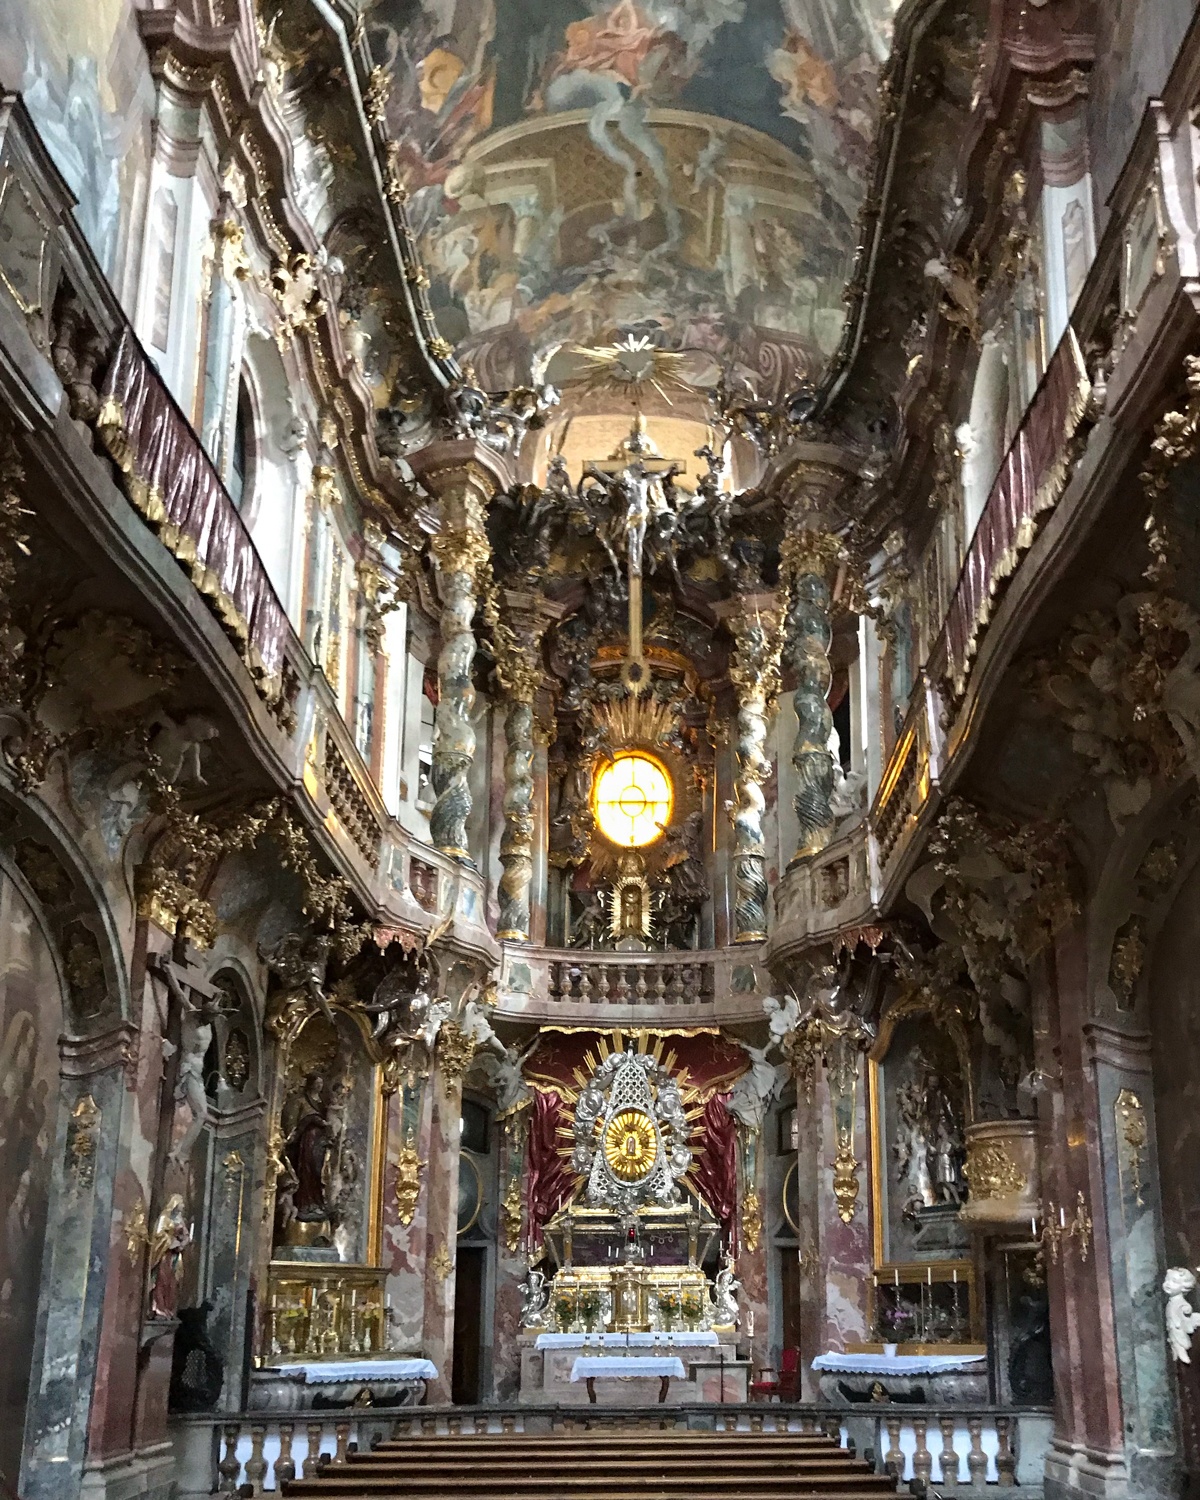 Asamkirche in Munich, Germany